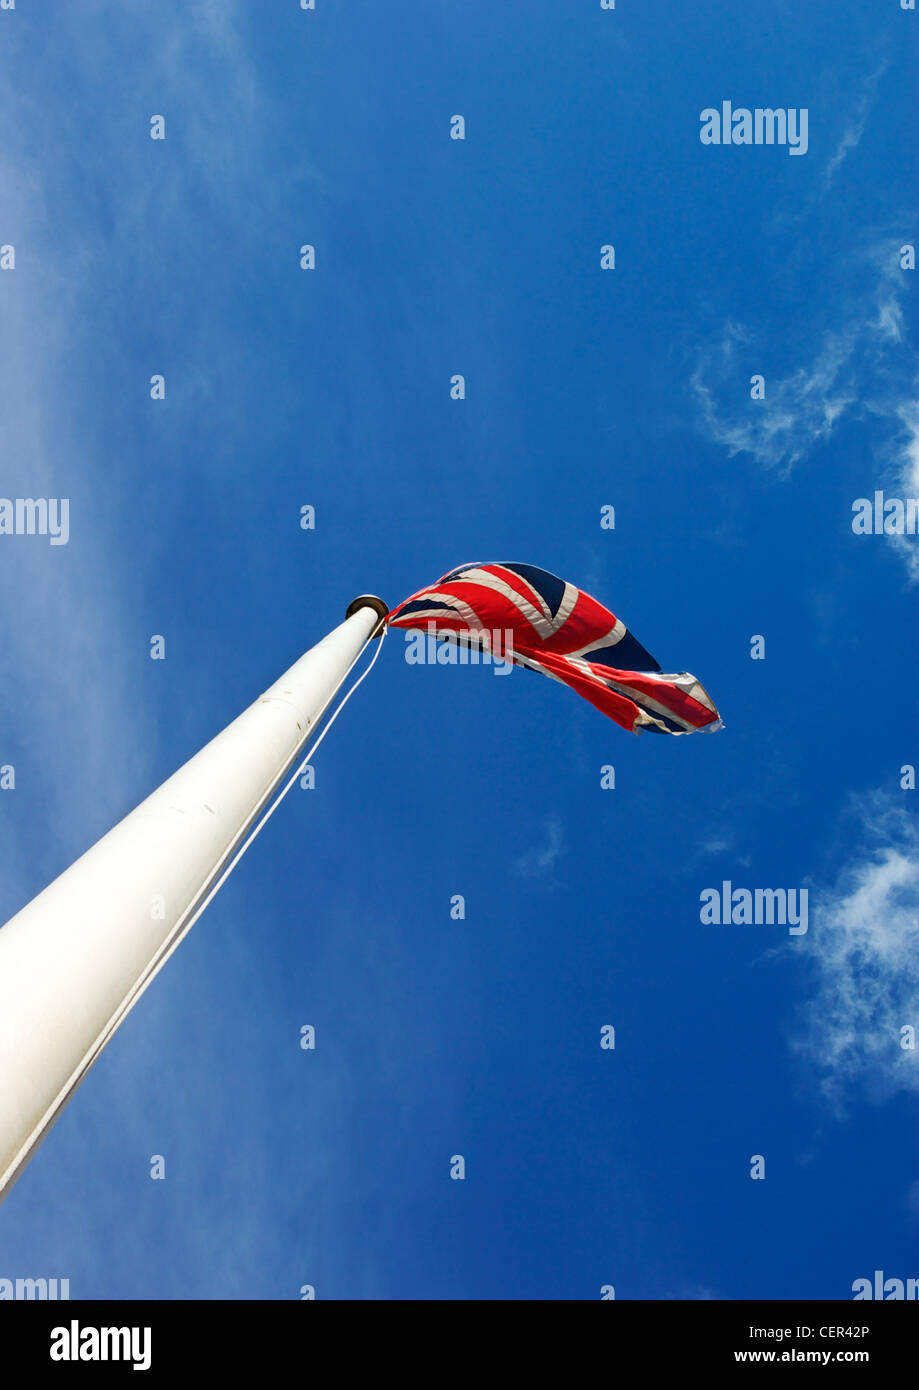 Union Jack flag on a white pole against a blue sky. Stock Photo